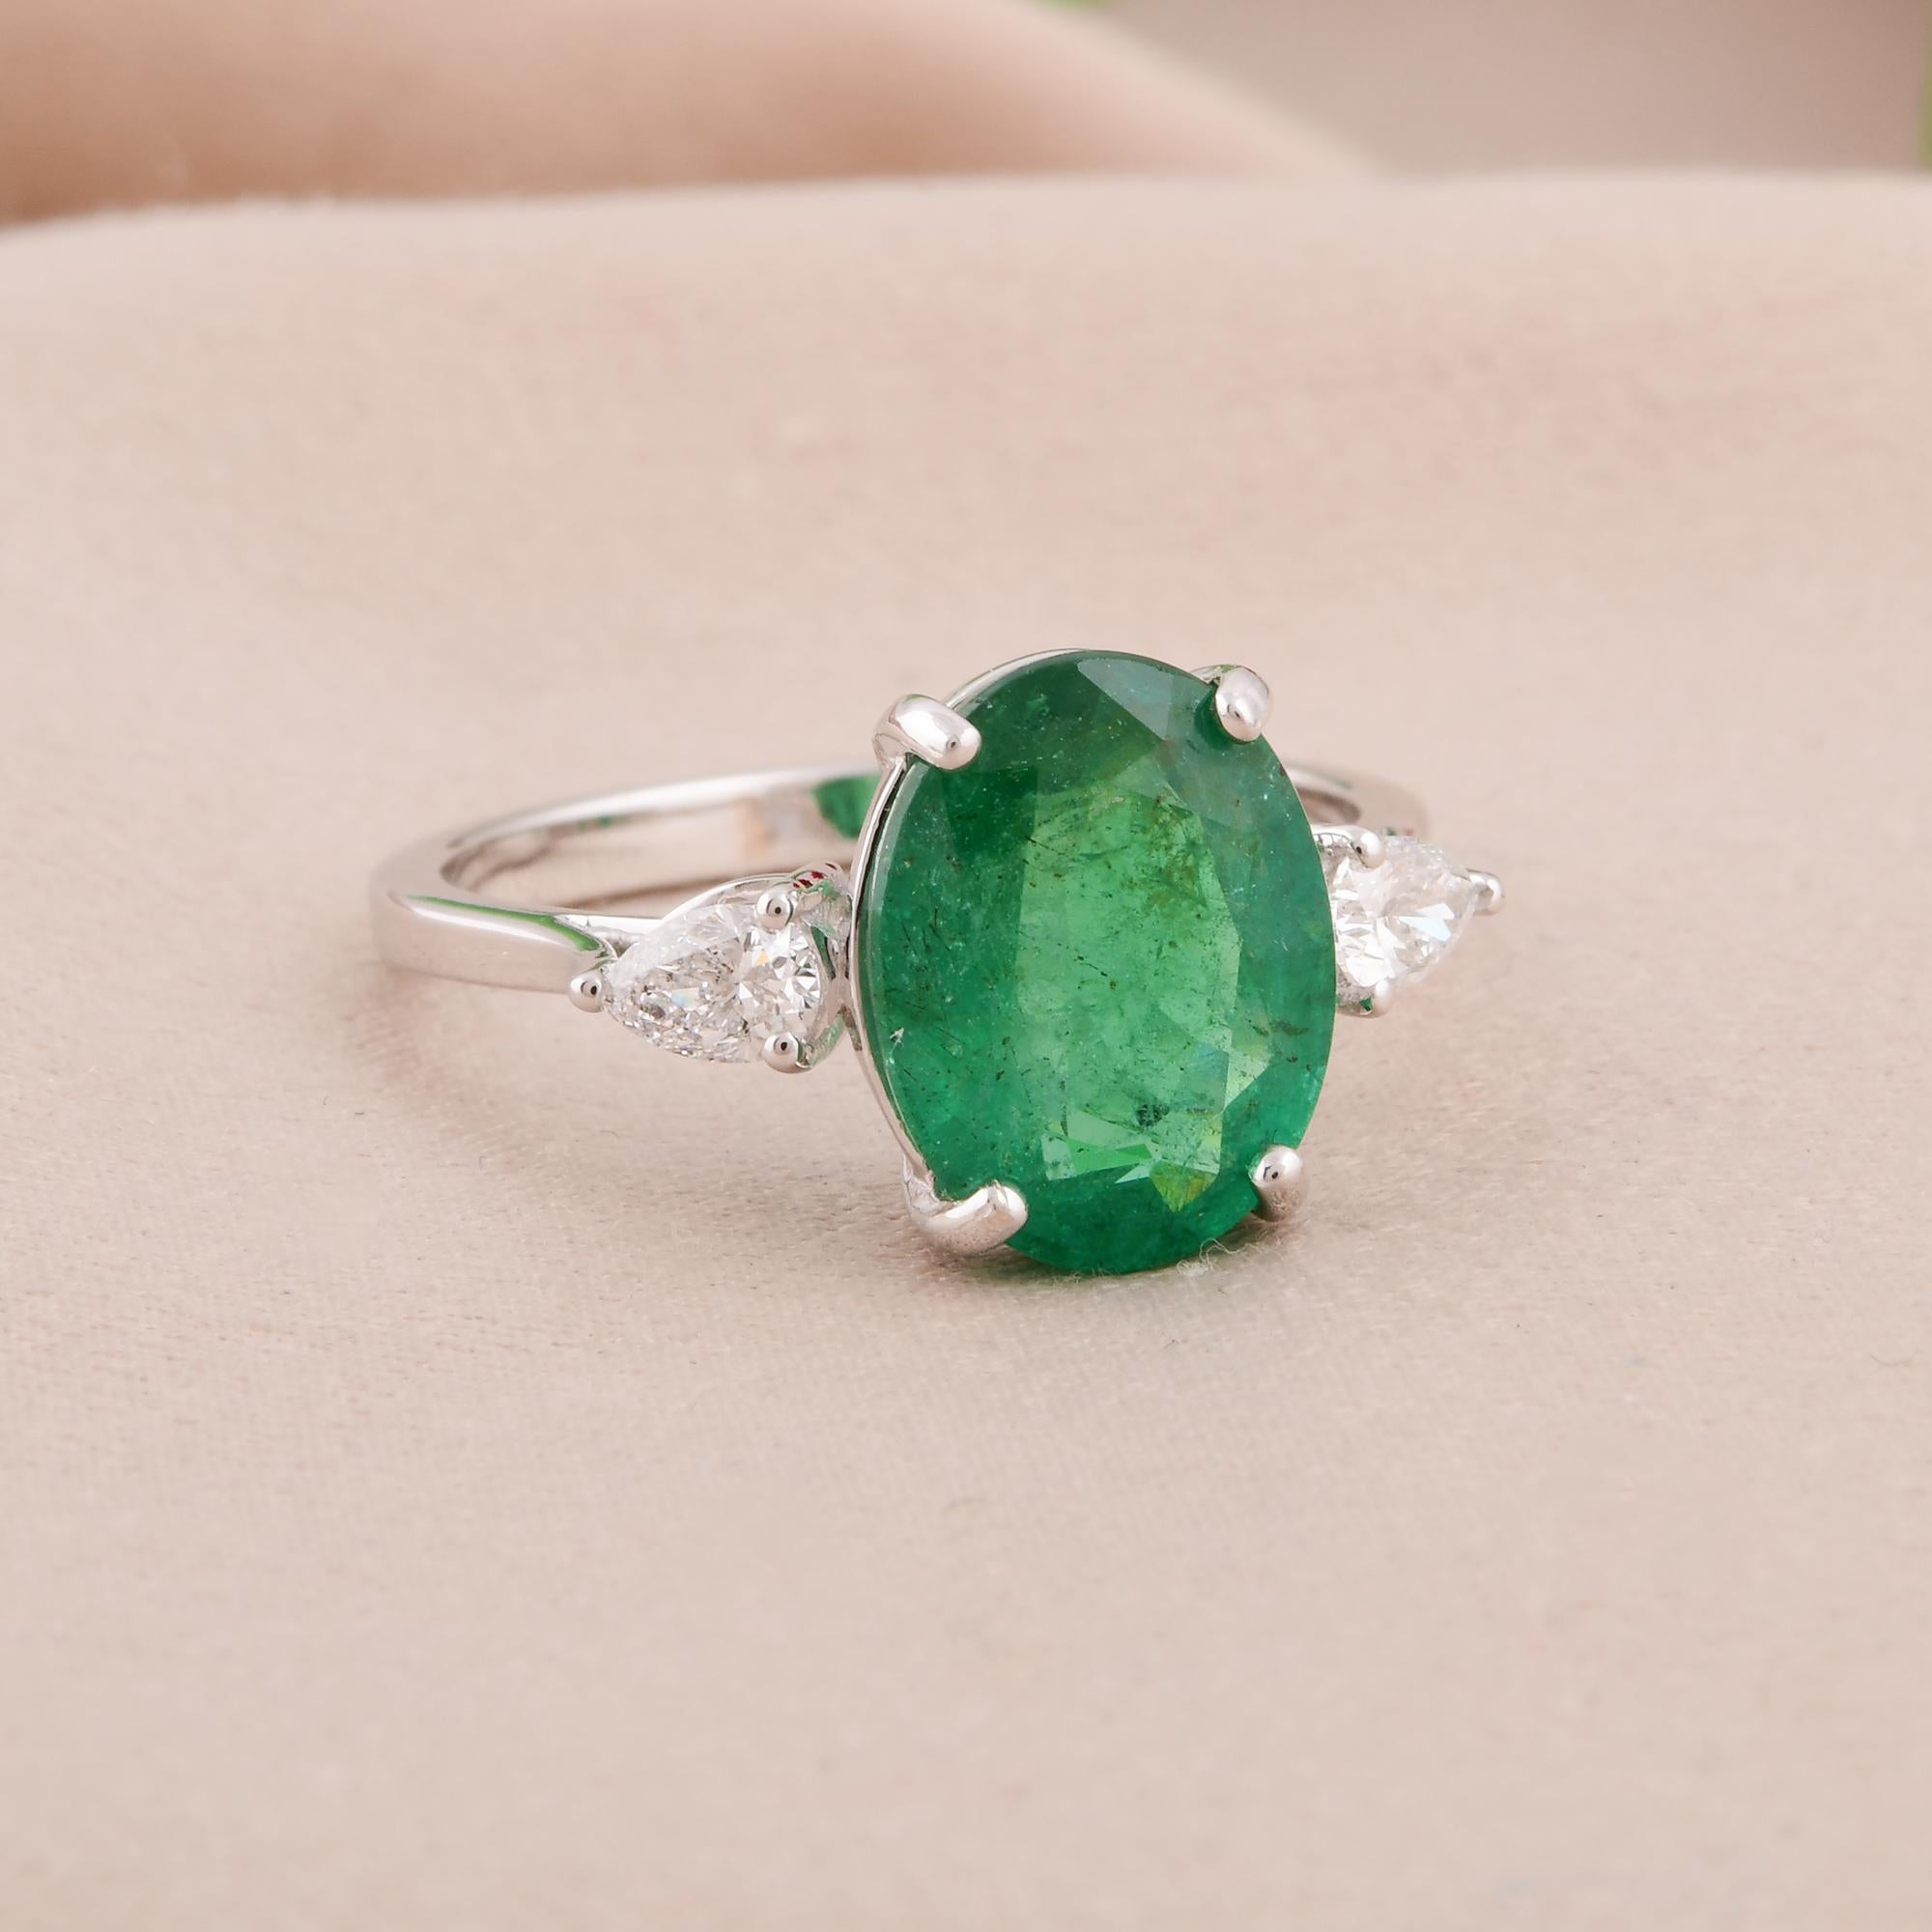 Oval Cut Oval Zambian Emerald Gemstone Cocktail Ring Diamond 14 Karat White Gold Jewelry For Sale